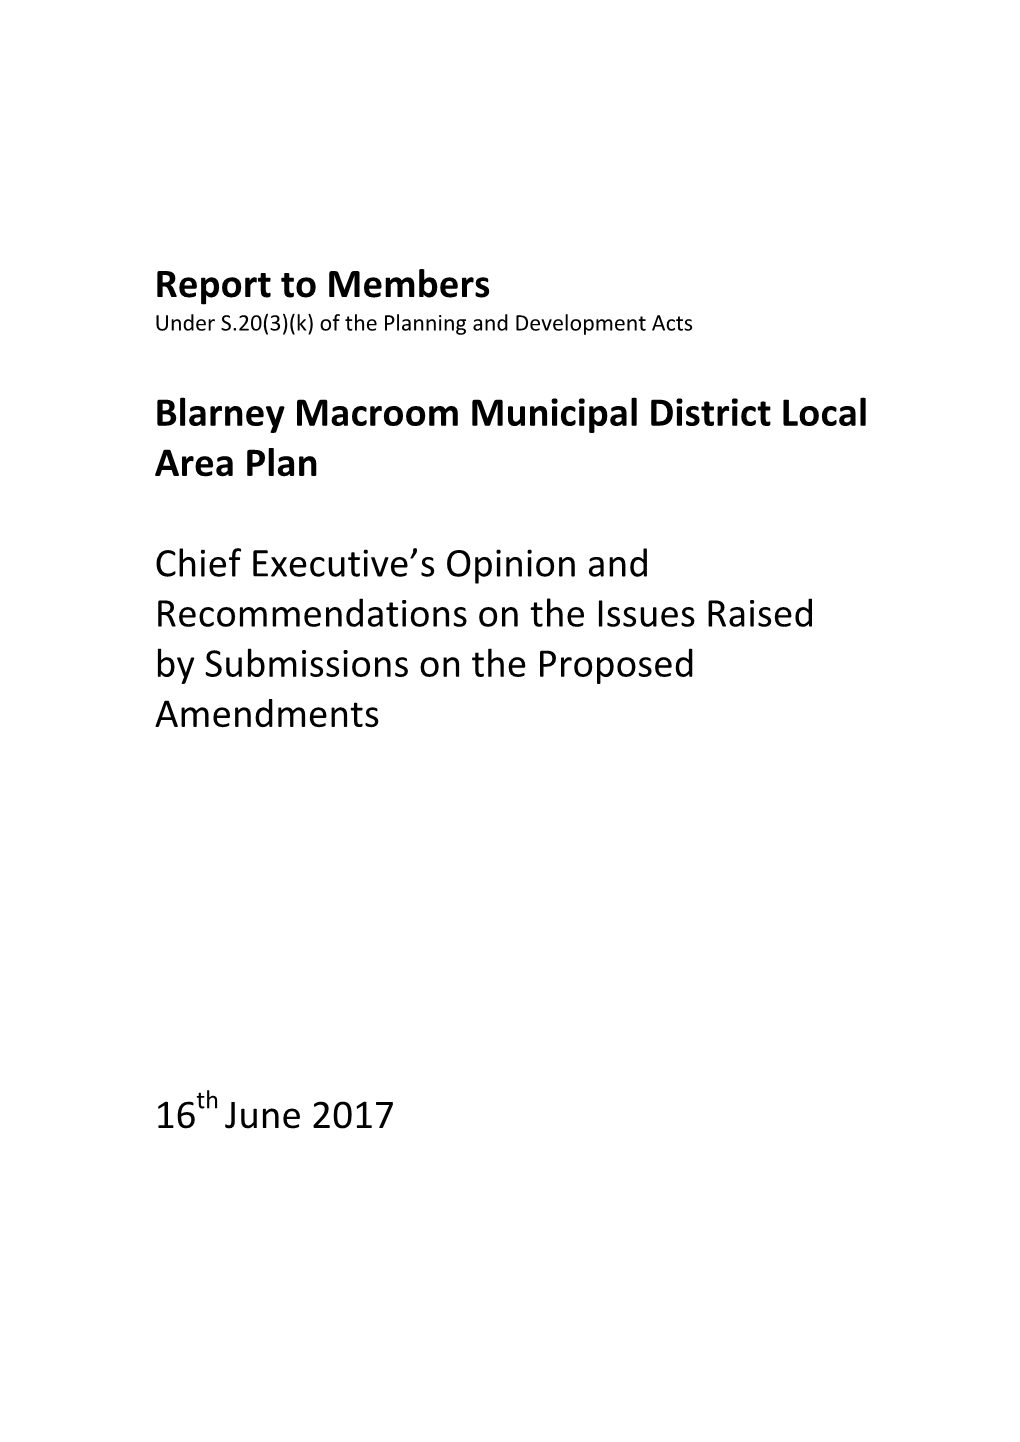 Blarney Macroom Municipal District Local Area Plan Chief Executive's